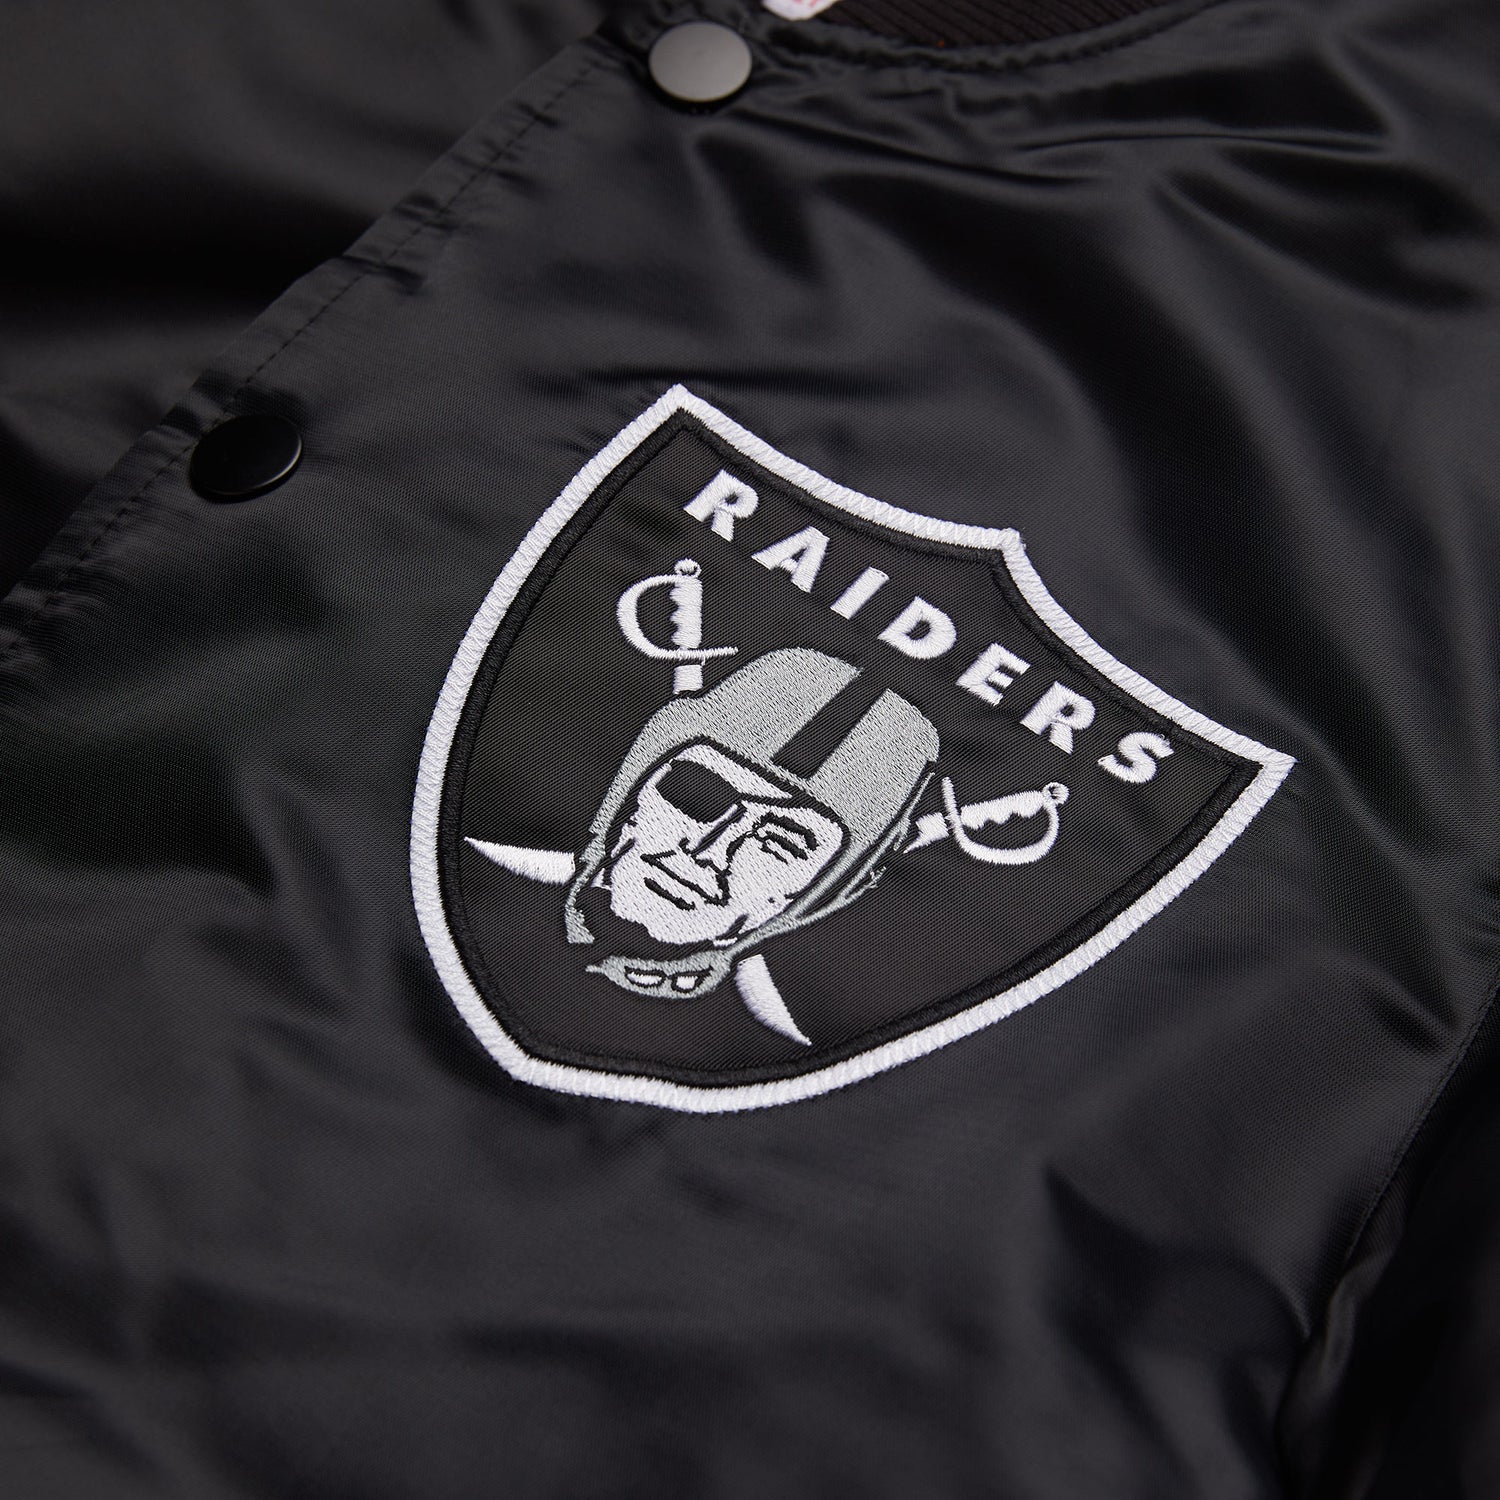 Raiders Starter Jacket